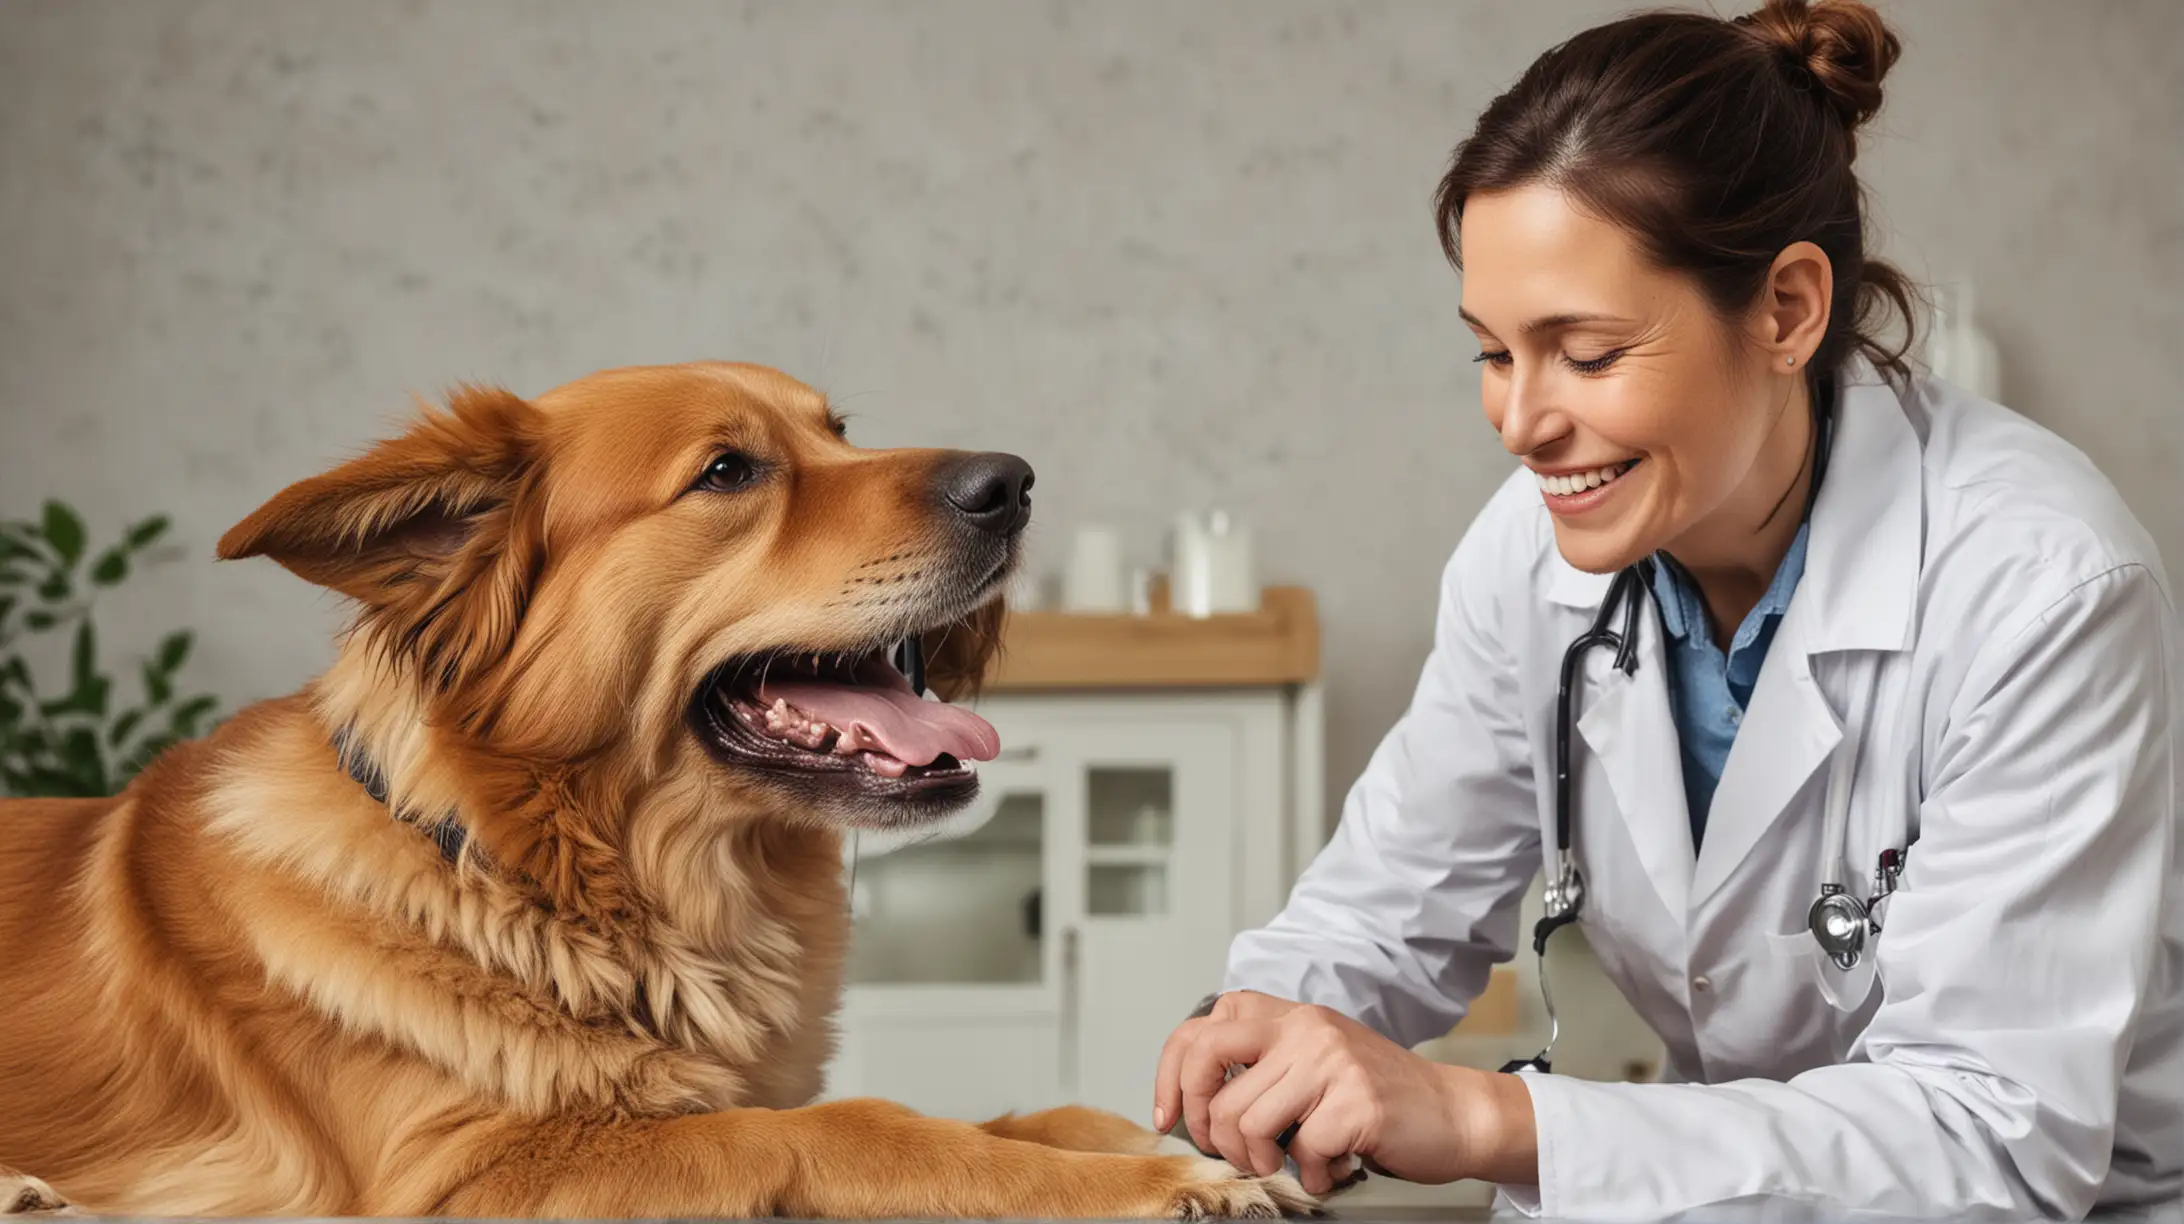 Veterinarian Examining Happy Dog in Their 40s